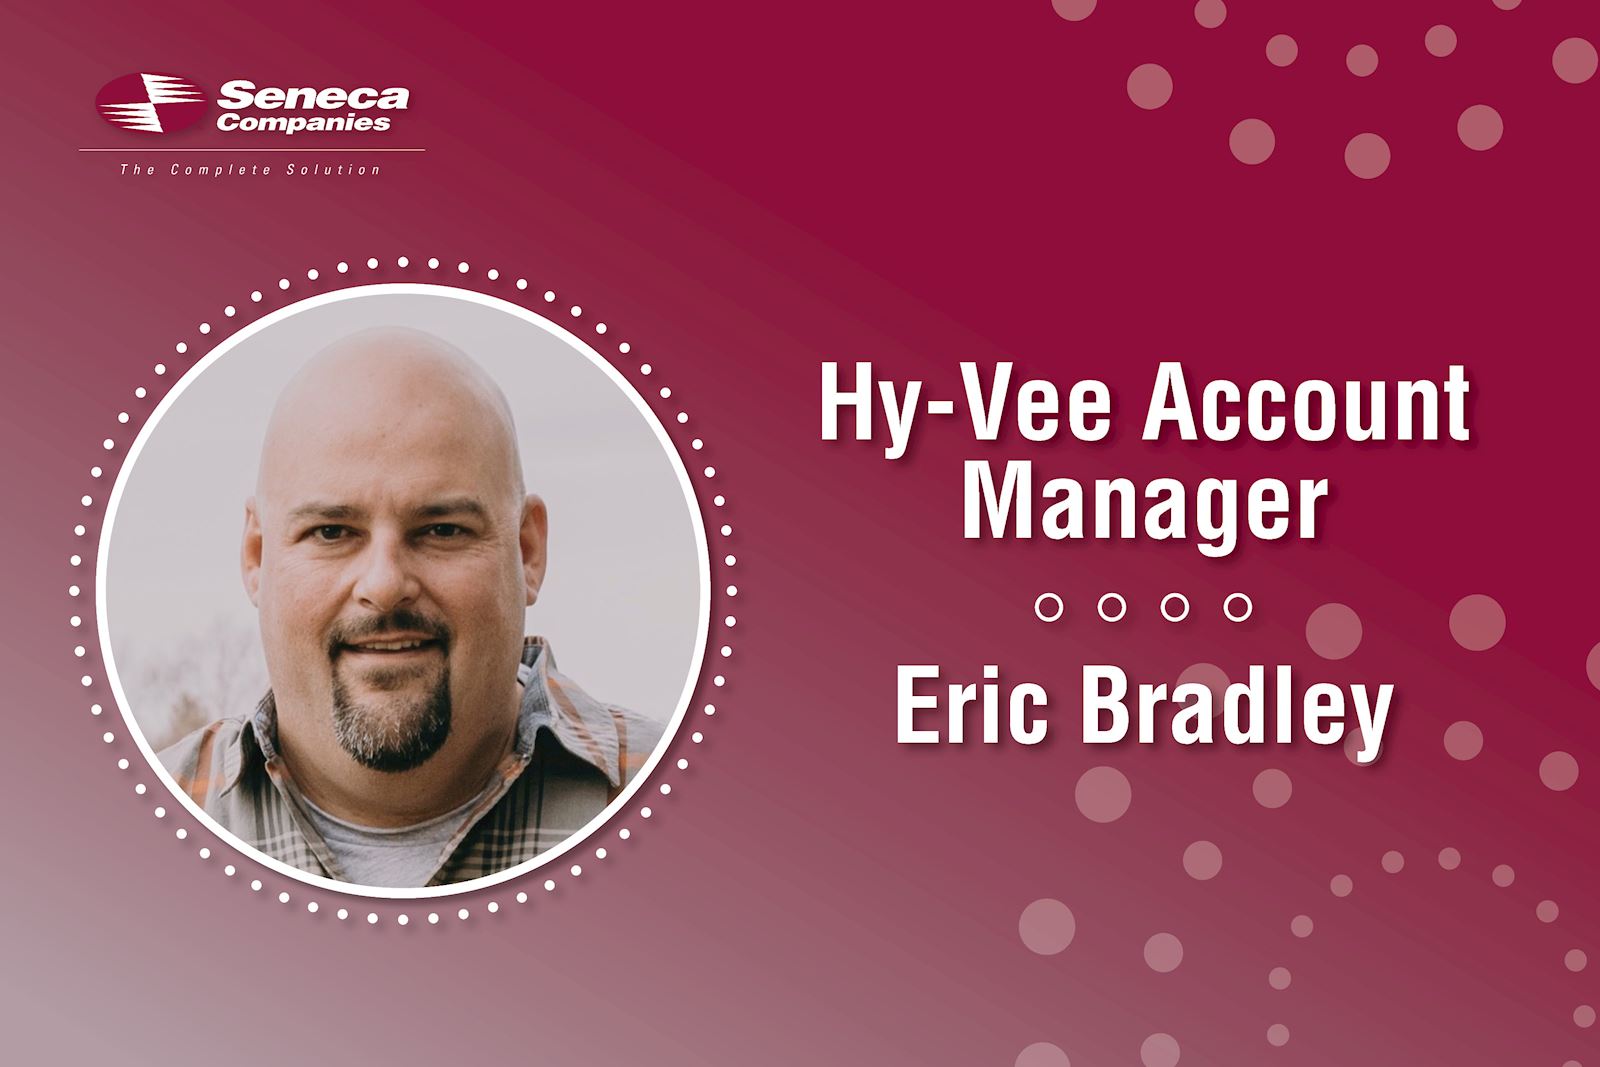 Seneca Companies names Hy-Vee Account Manager